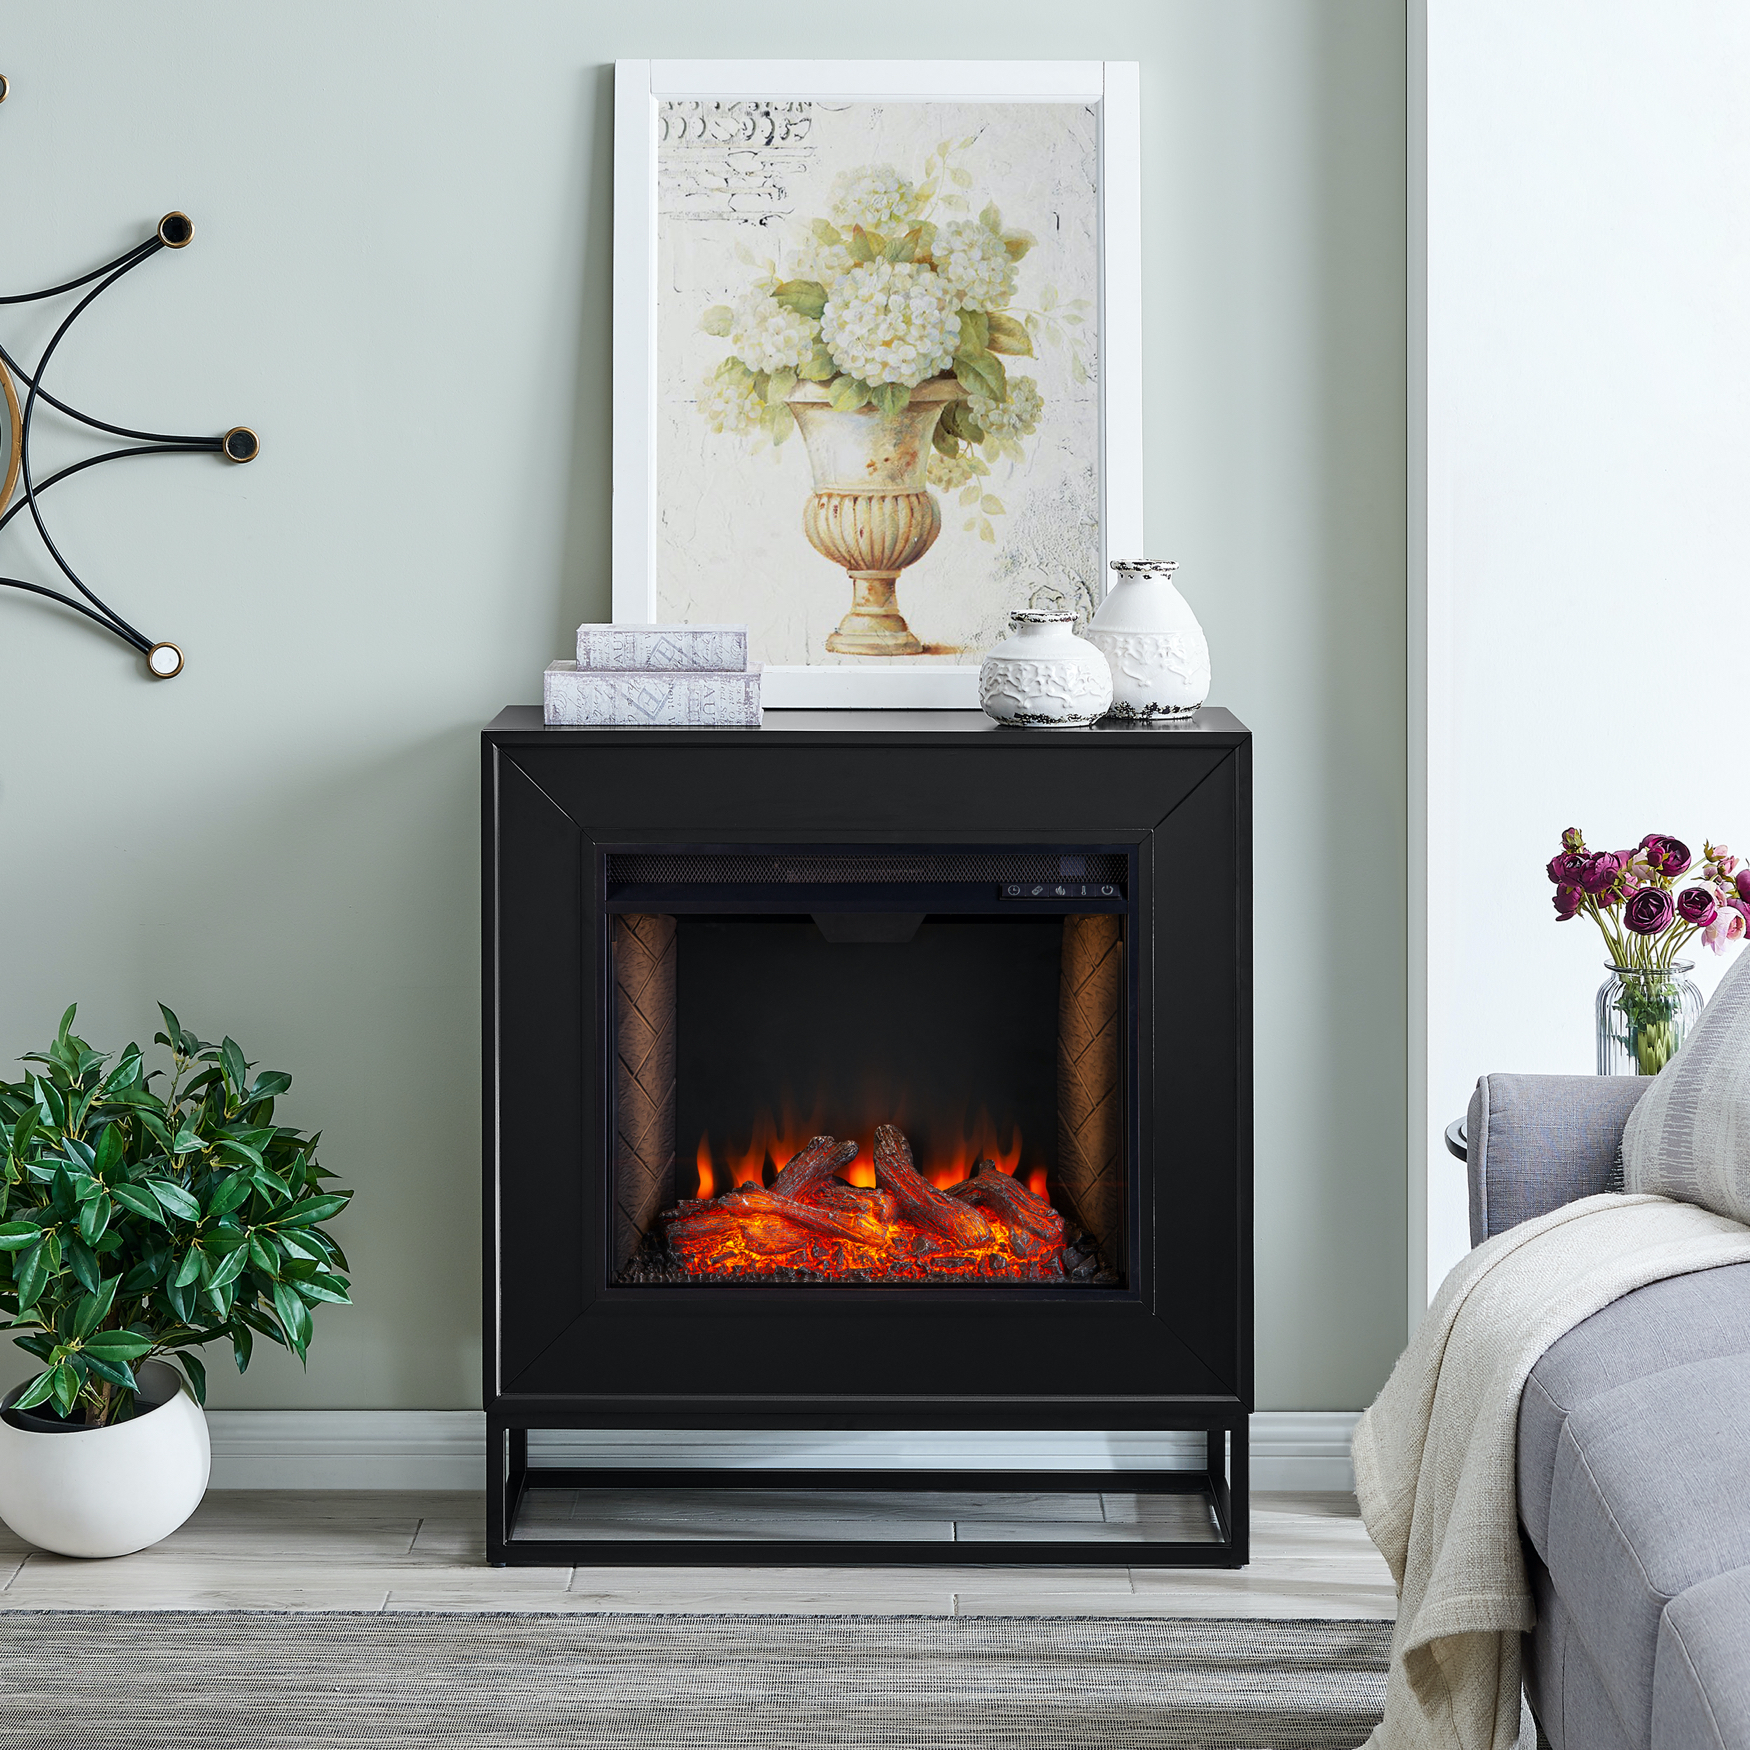 Frescan Alexa-Enabled Smart Fireplace, BLACK